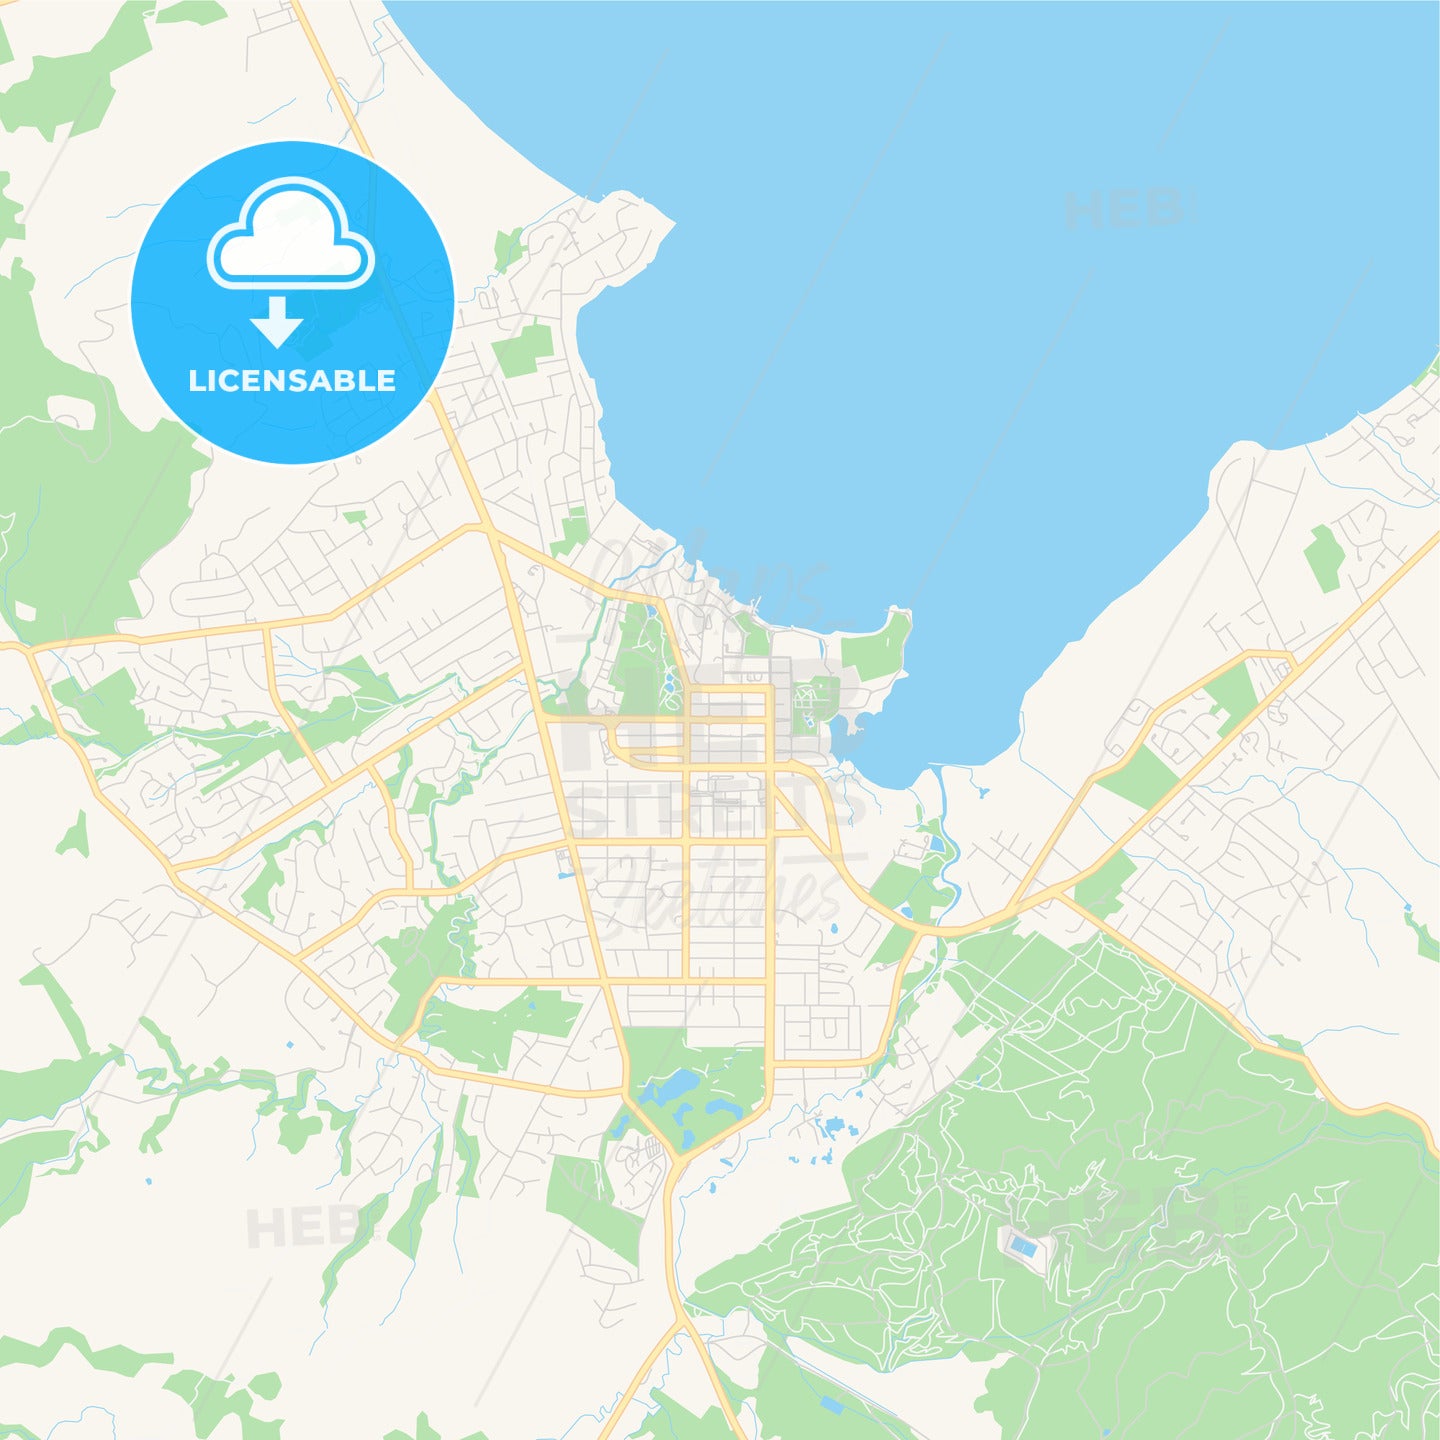 Printable street map of Rotorua, New Zealand